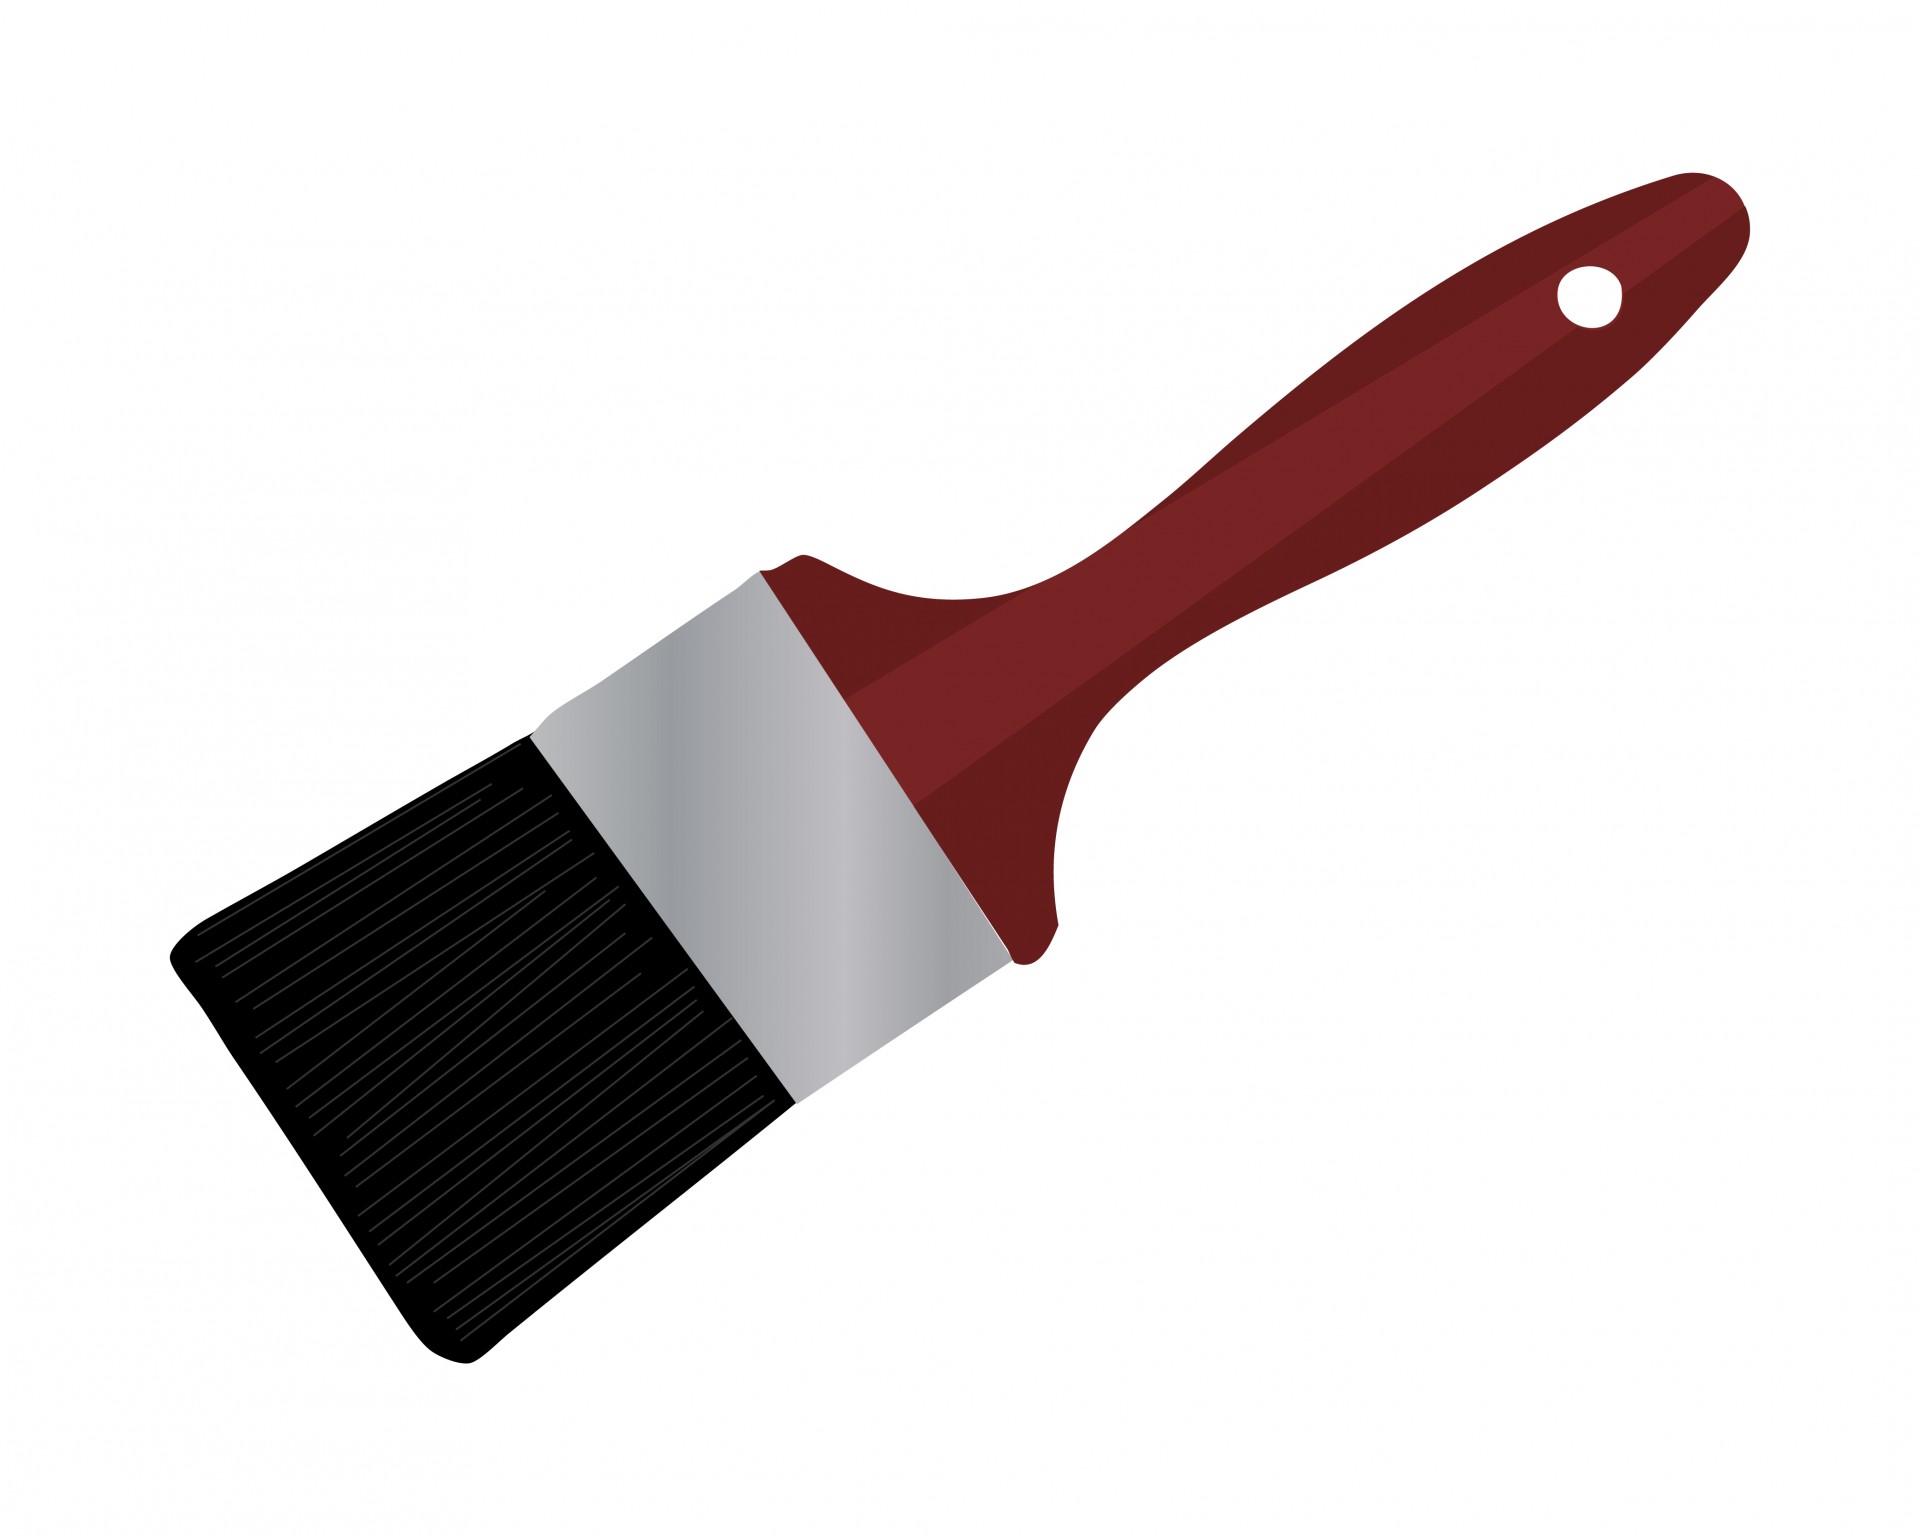 Free Paintbrush Cliparts, Download Free Paintbrush